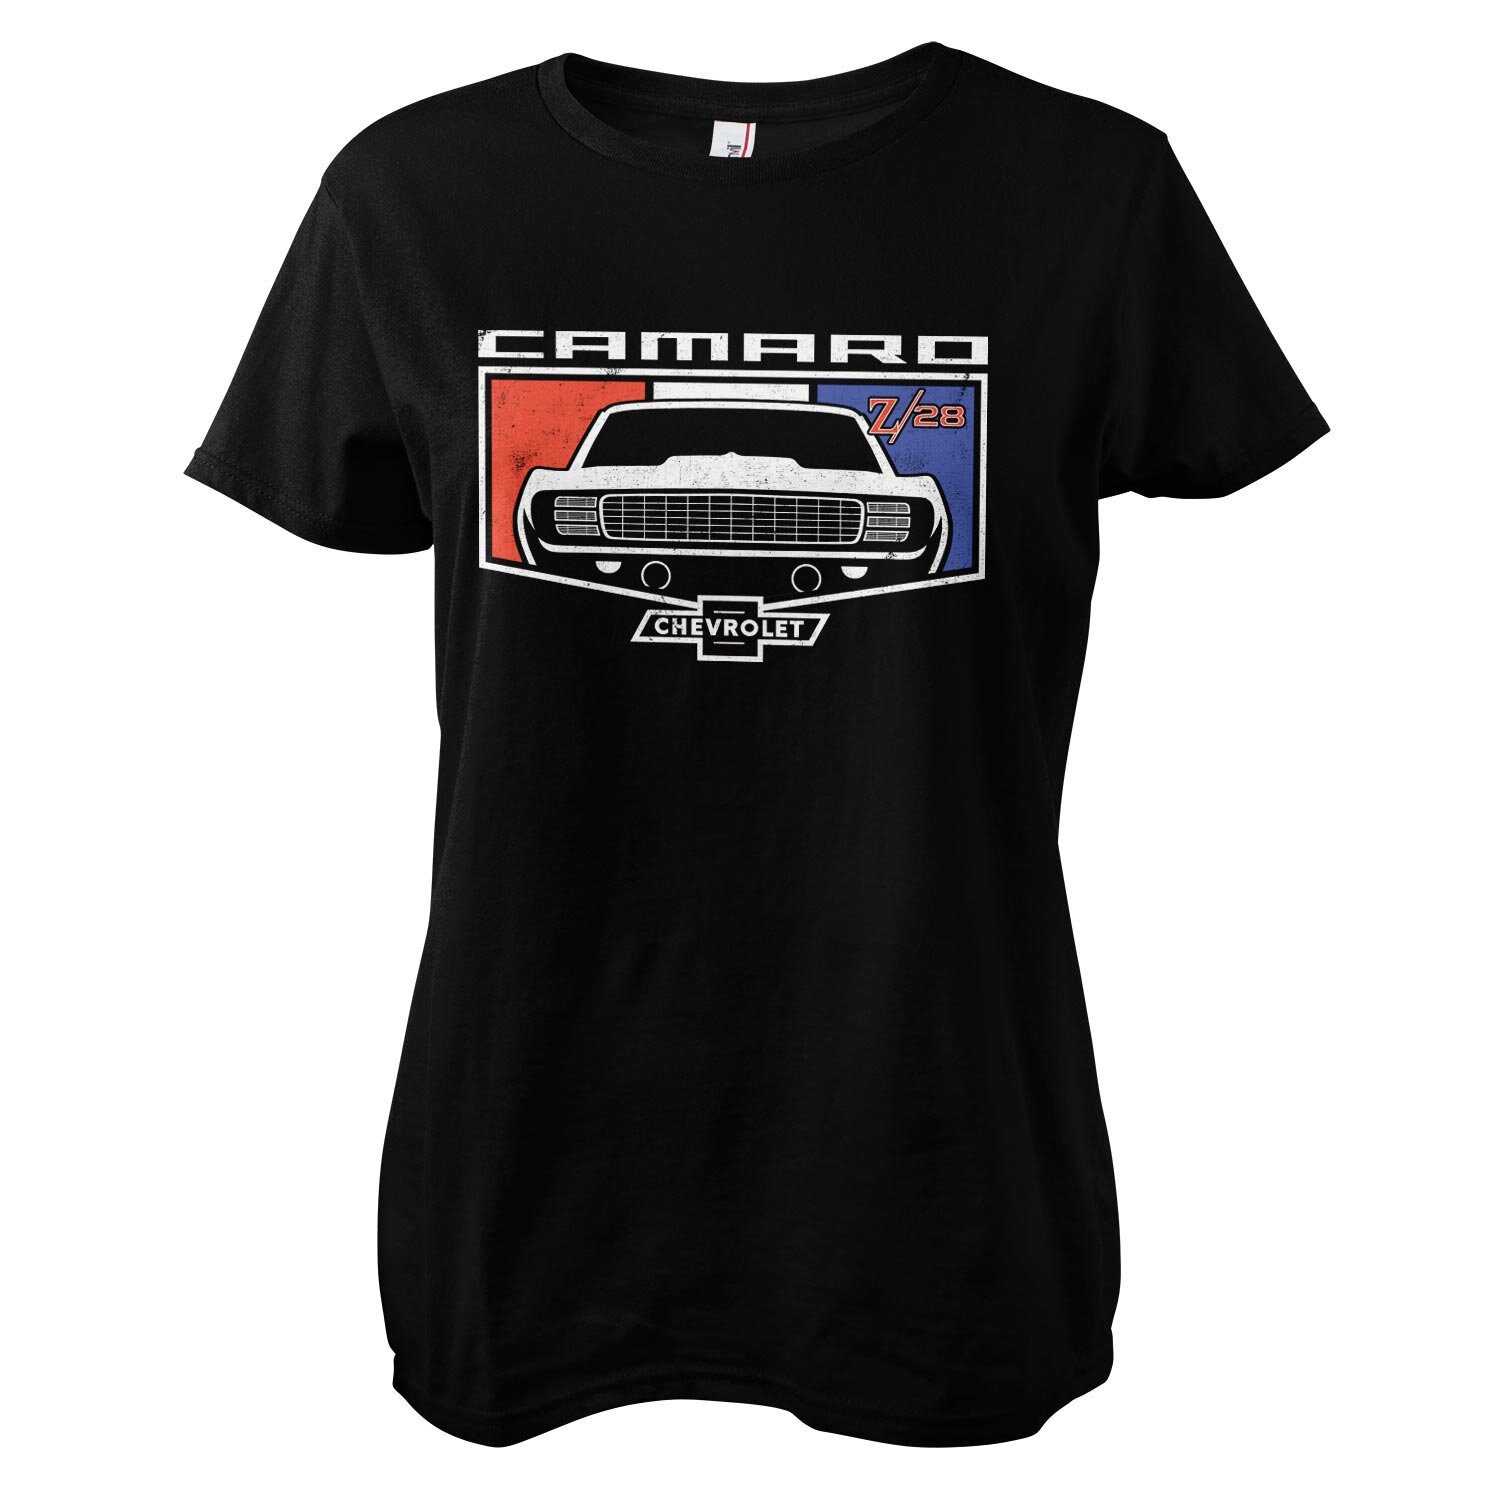 Chevrolet Camaro Emblem Girly Tee